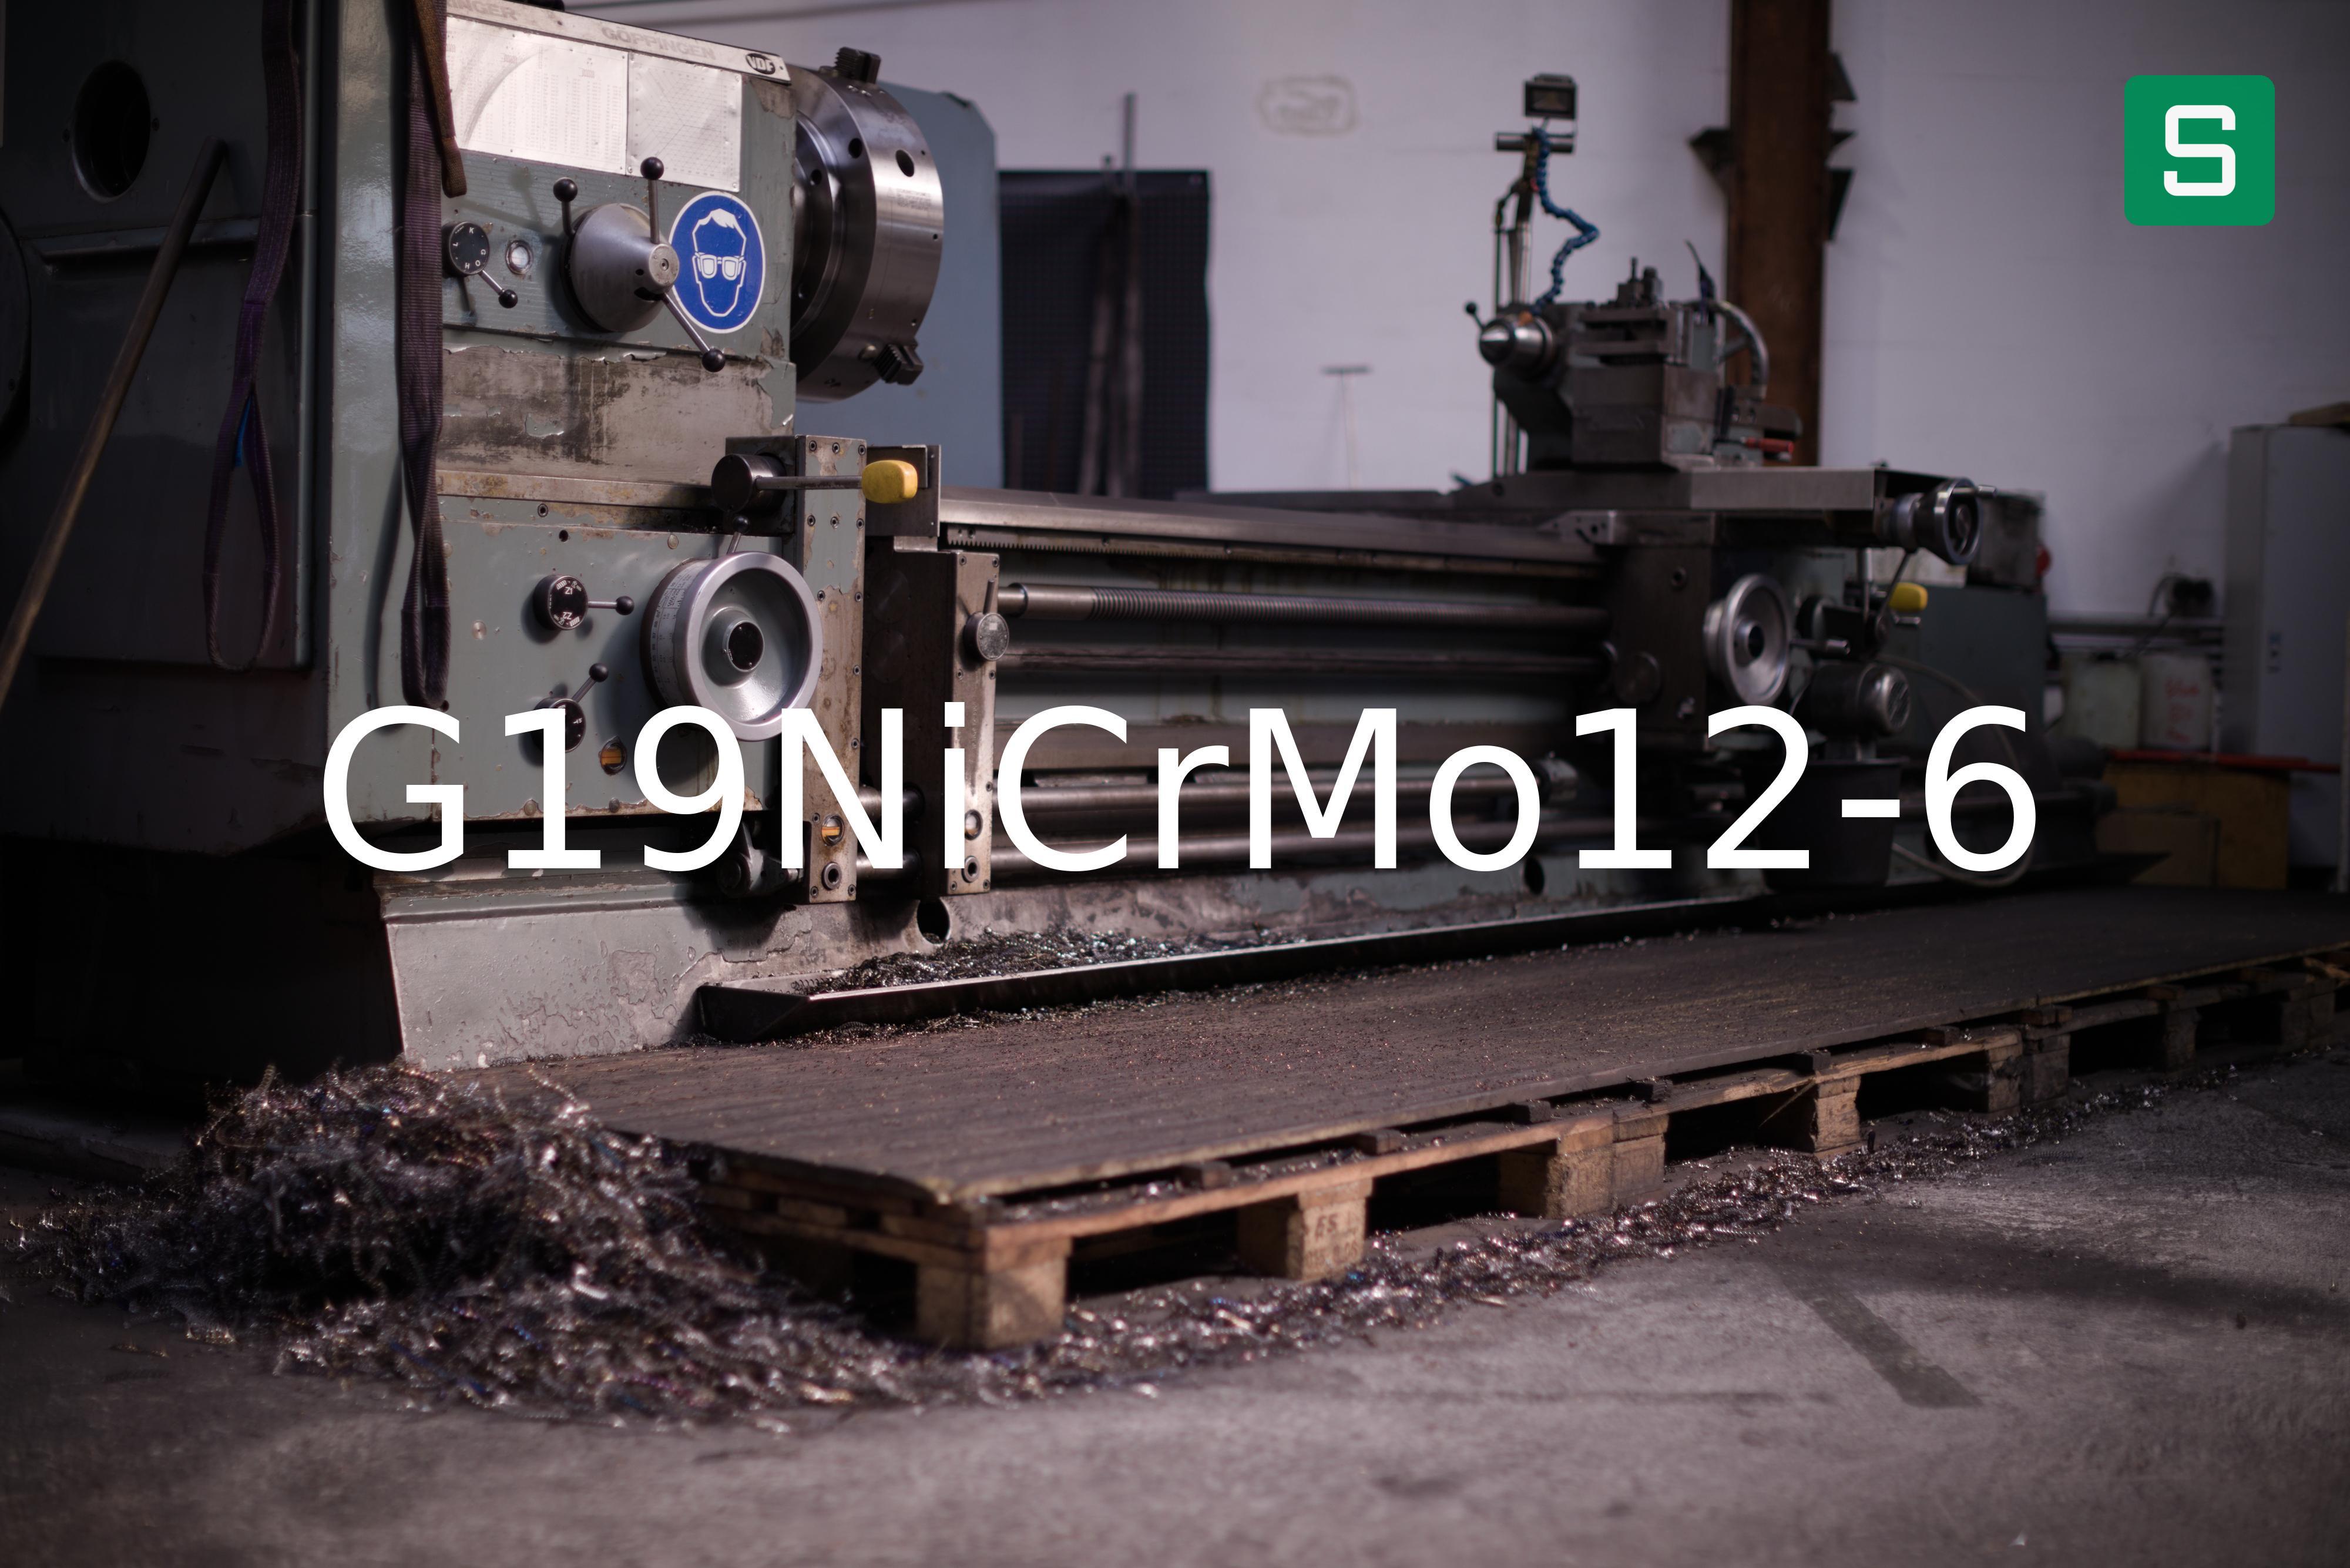 Steel Material: G19NiCrMo12-6